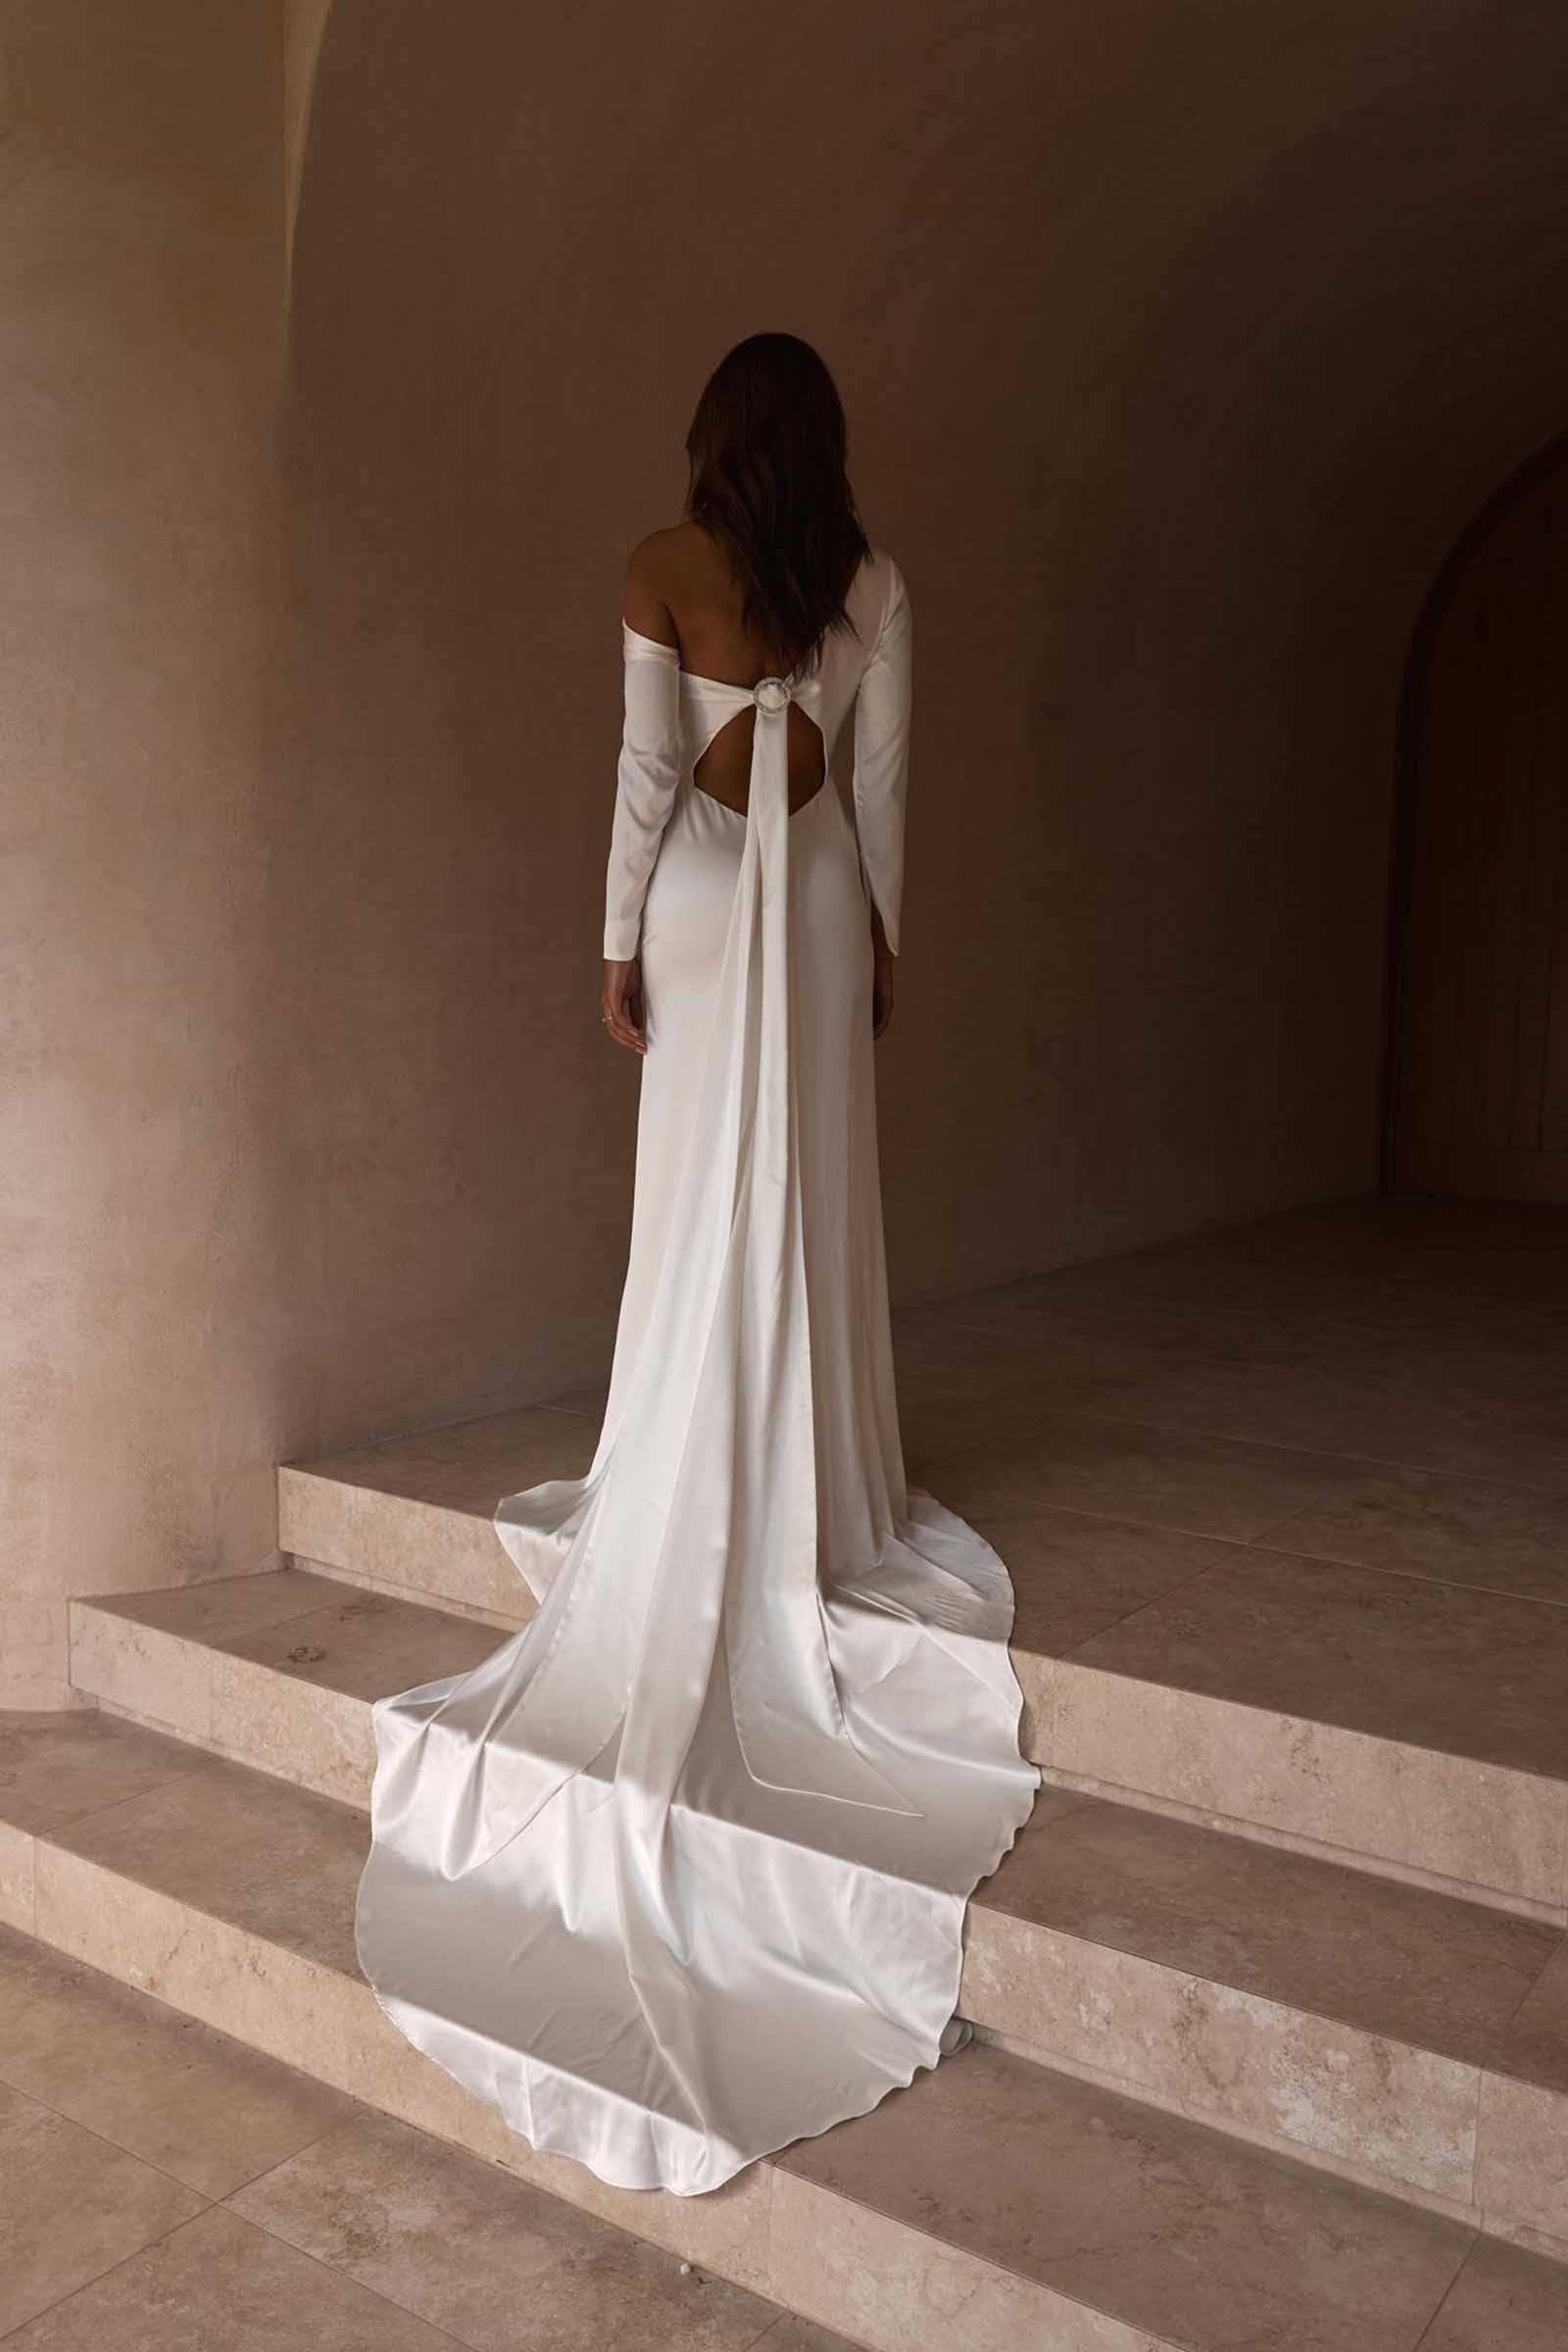 Sheer Long Sleeves Lace Wedding Dresses Backless – loveangeldress